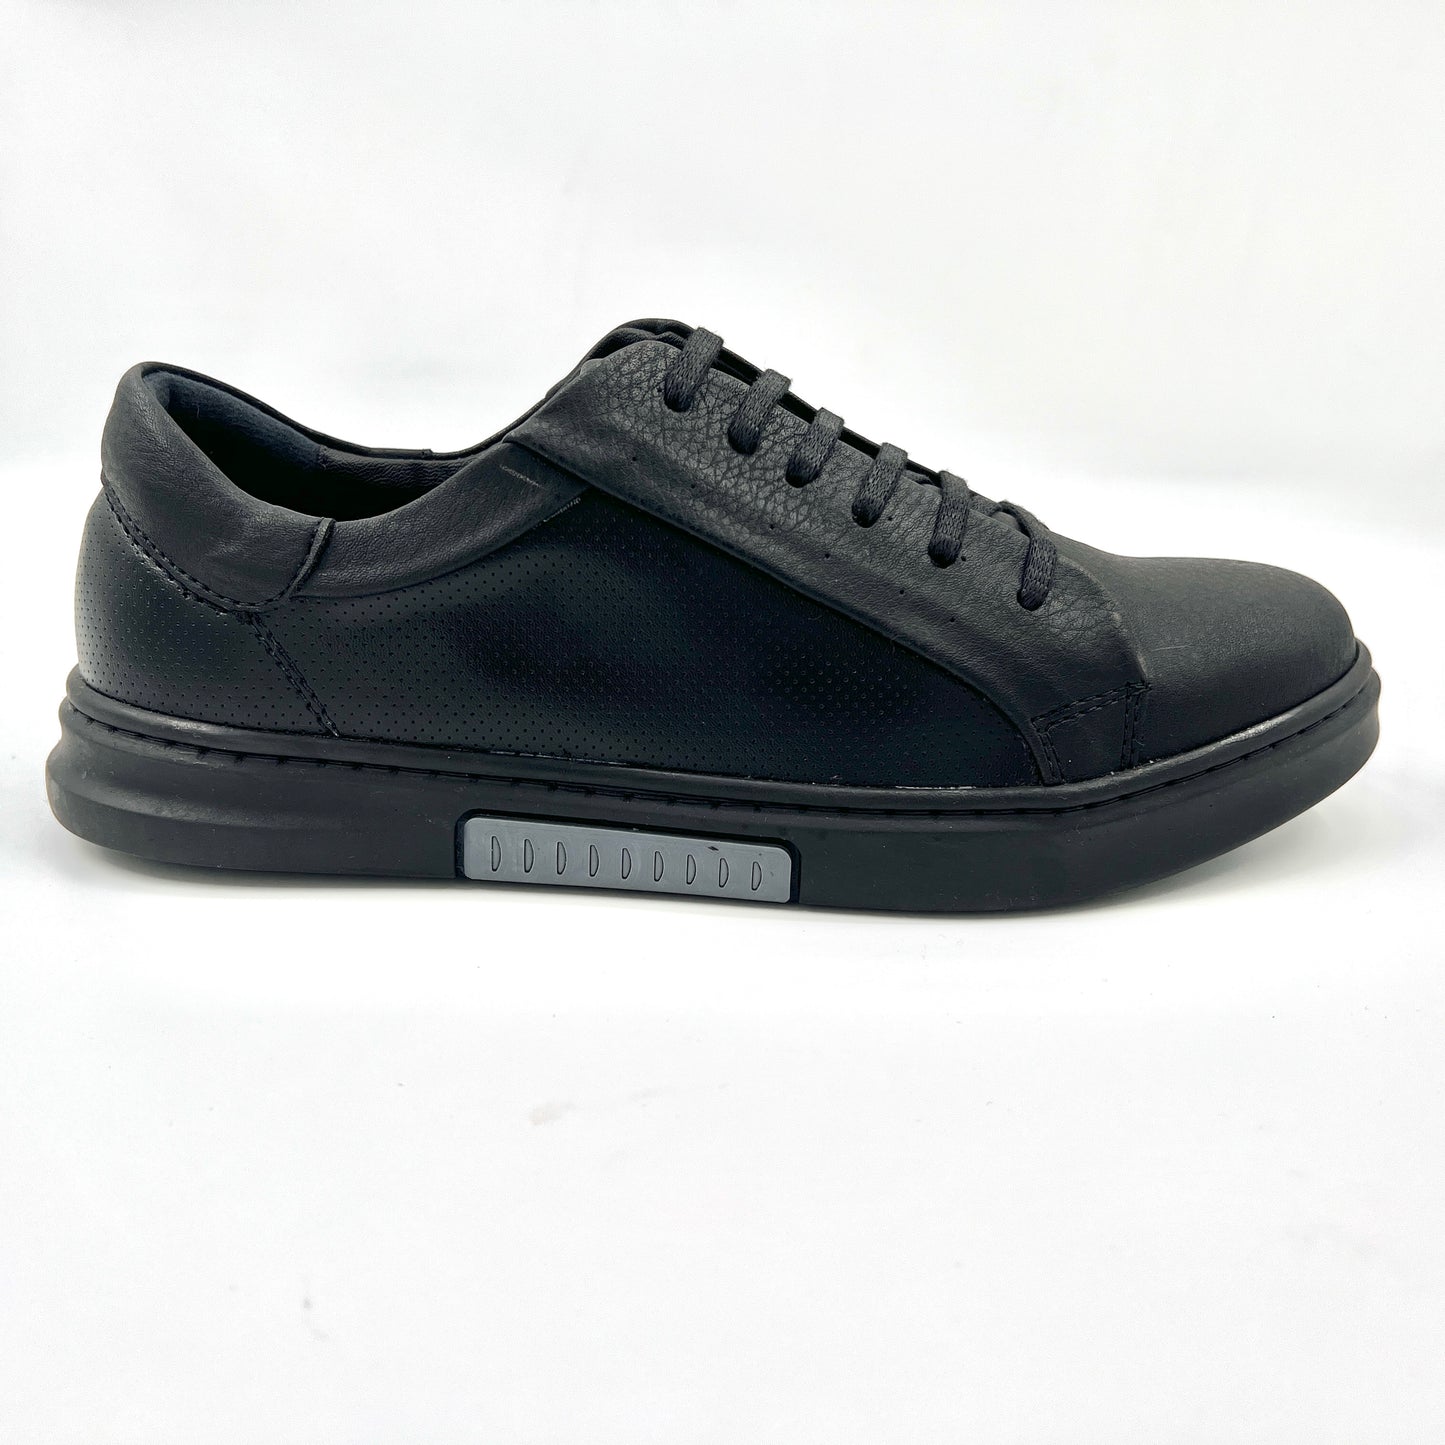 SALE! 2H 711 Black/Grey Casual Shoes